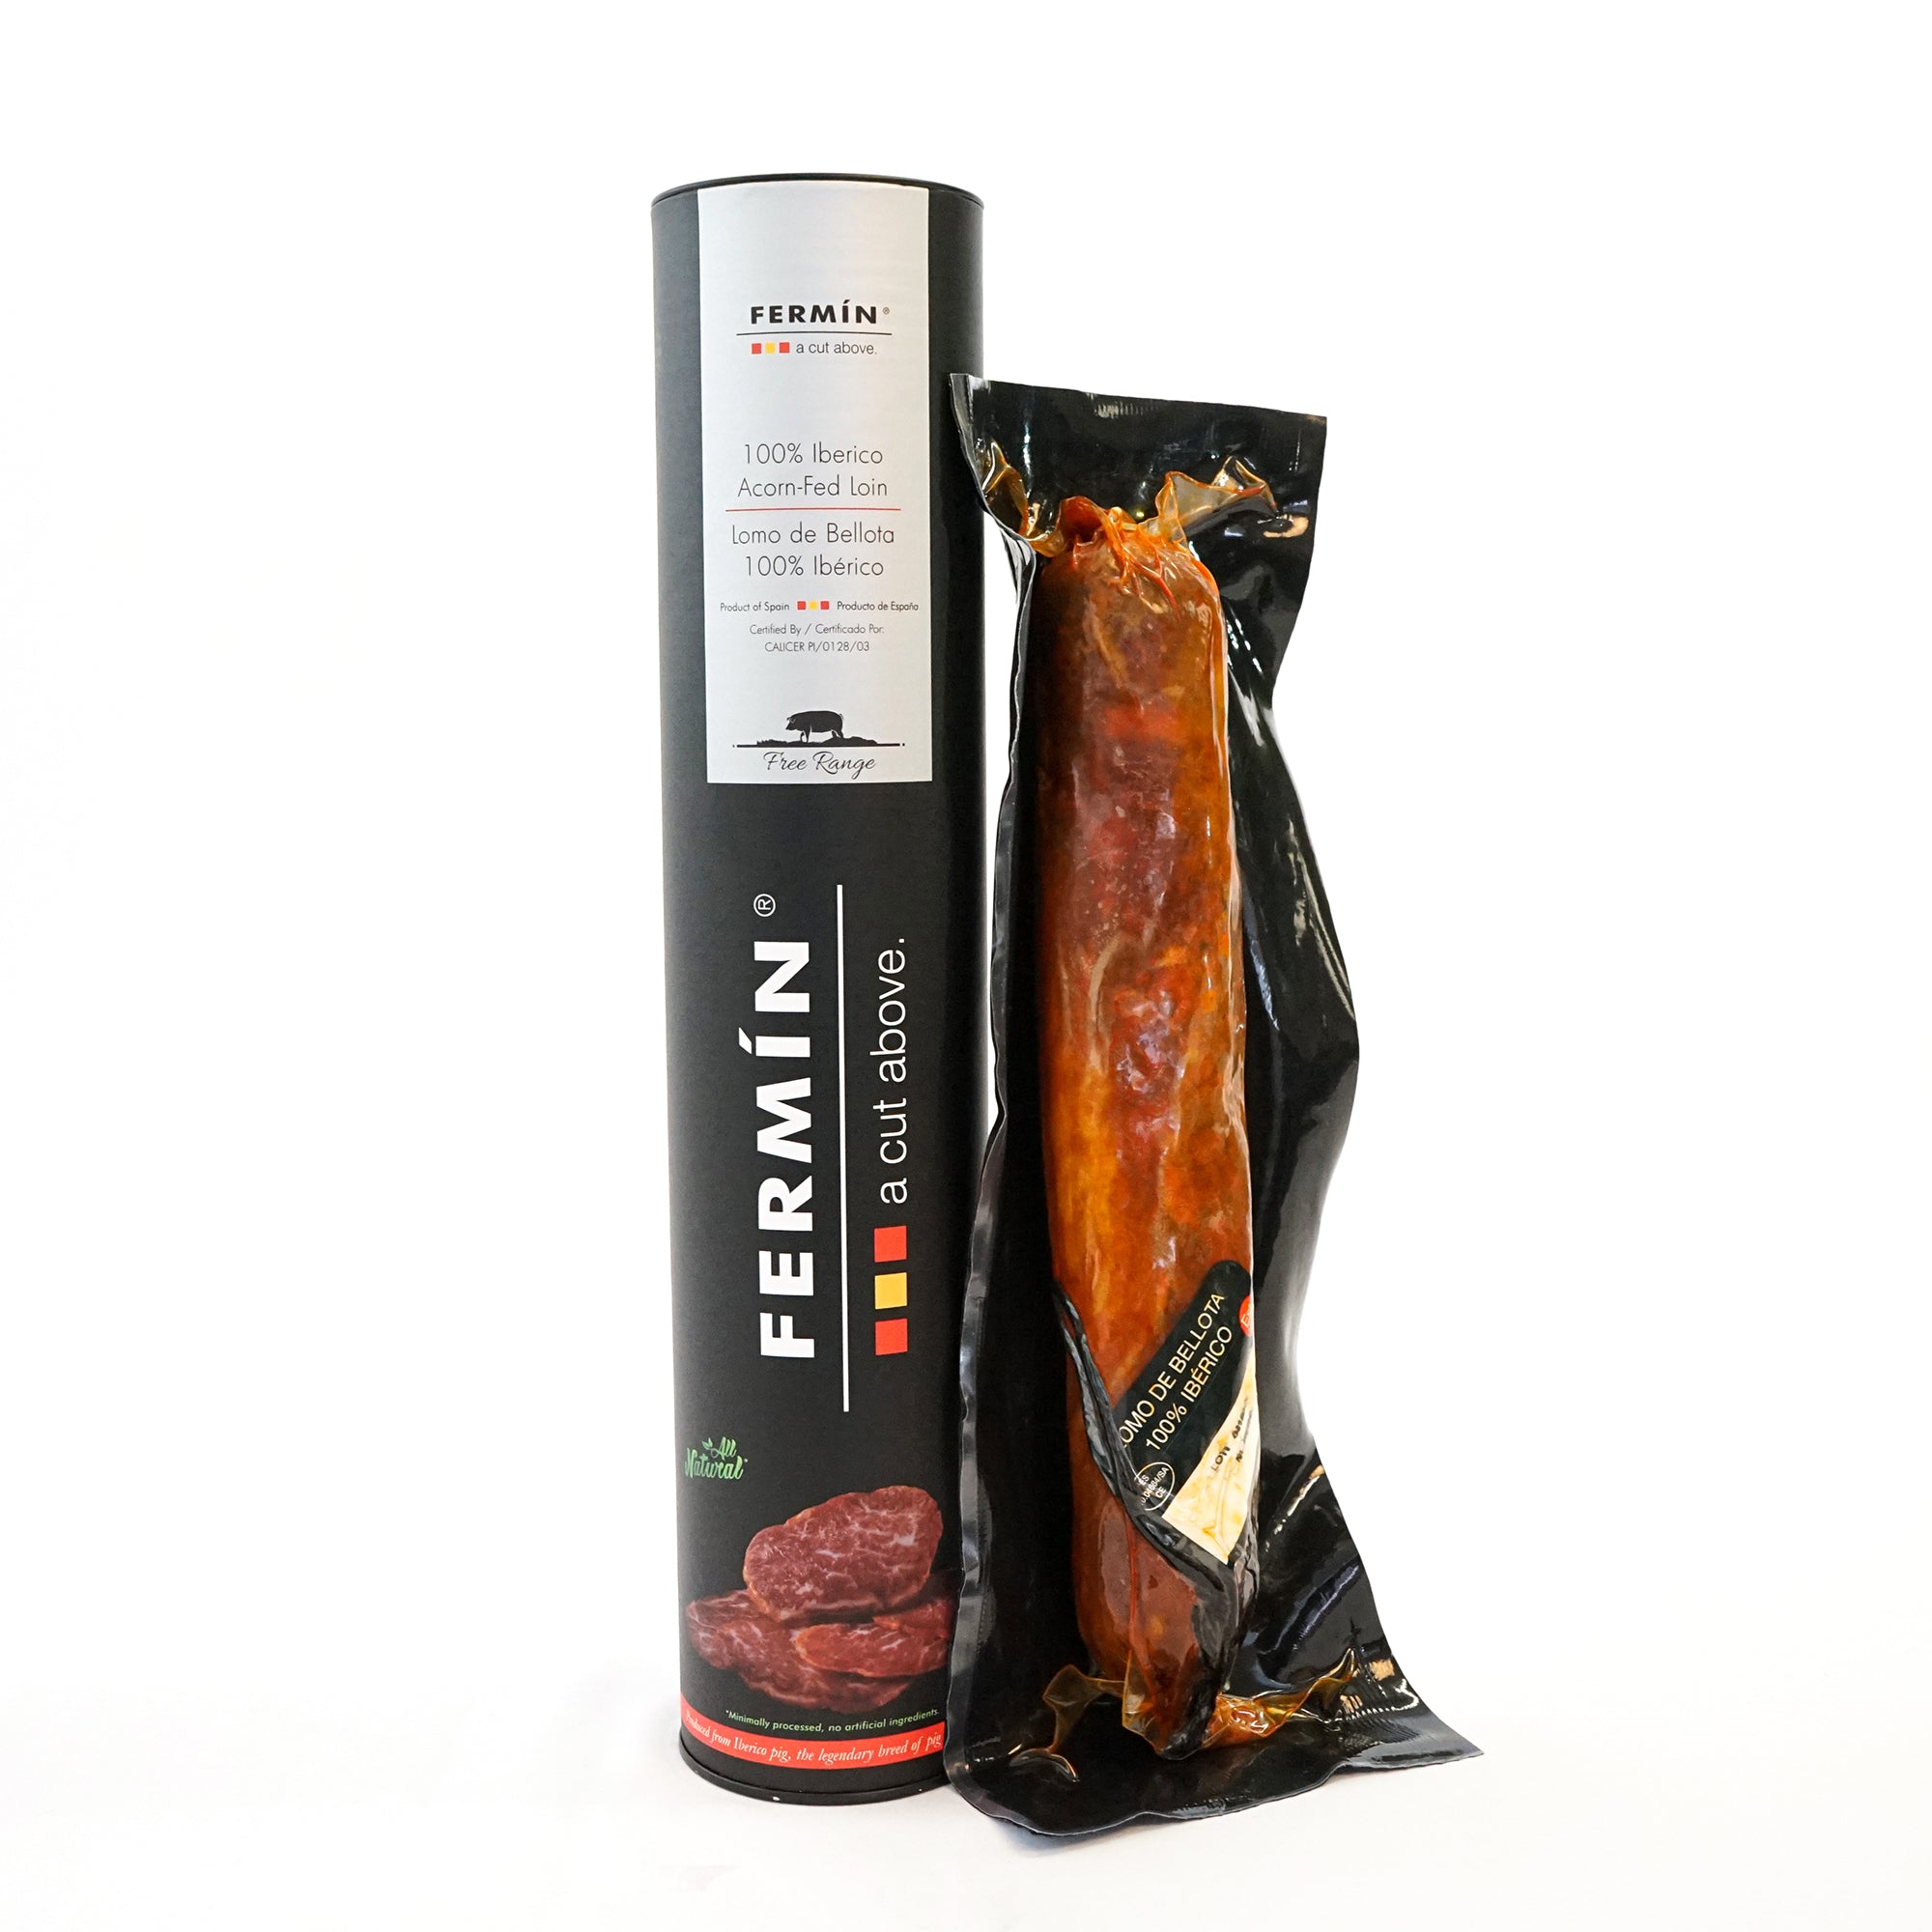 Iberico Acorn-fed loin tube (1 lb Average weight) by Fermin